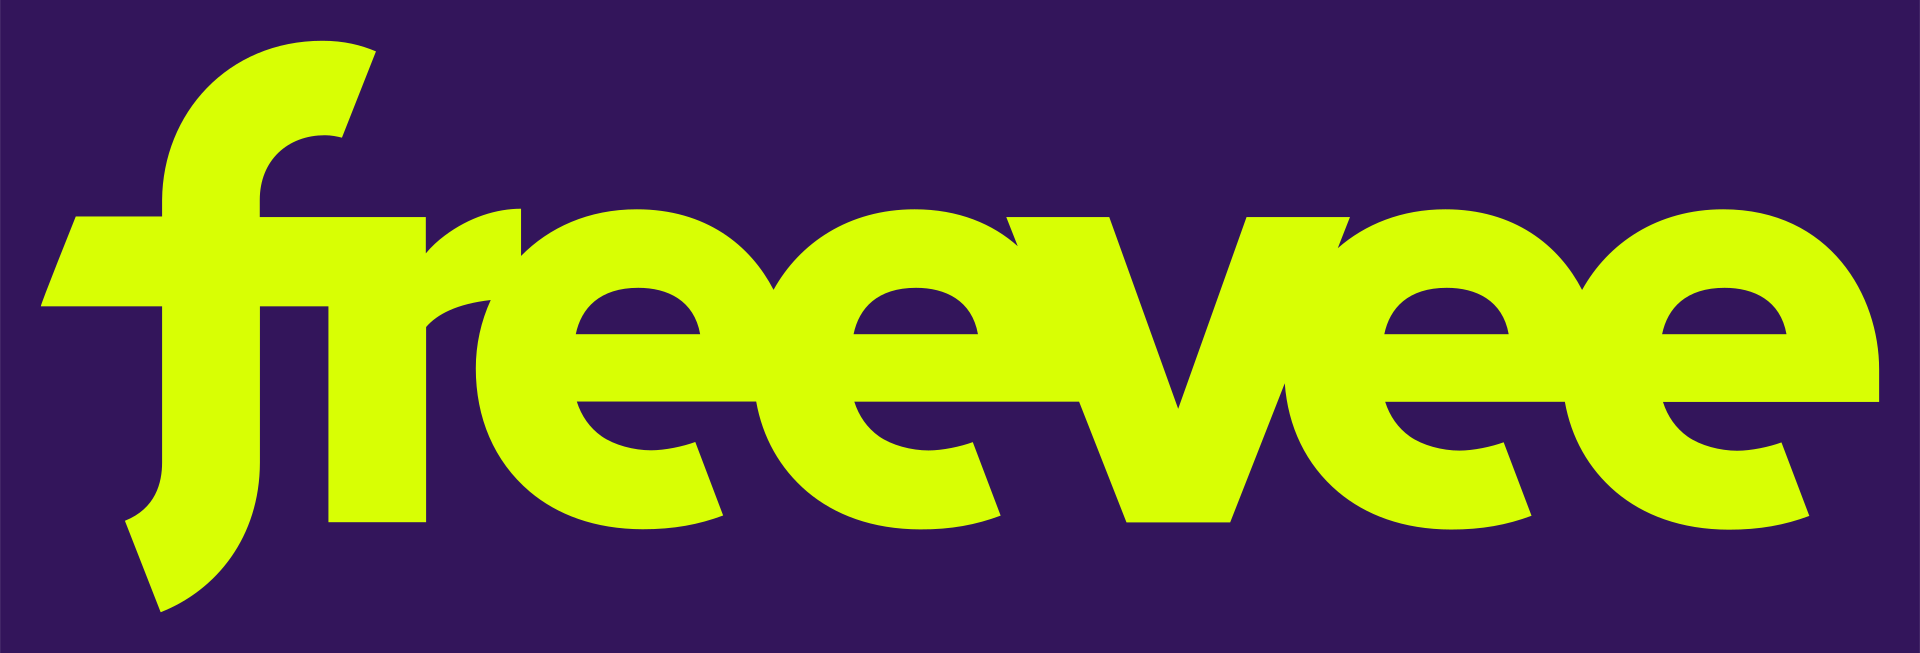 Freevee_logo_background_purple.svg-1.png